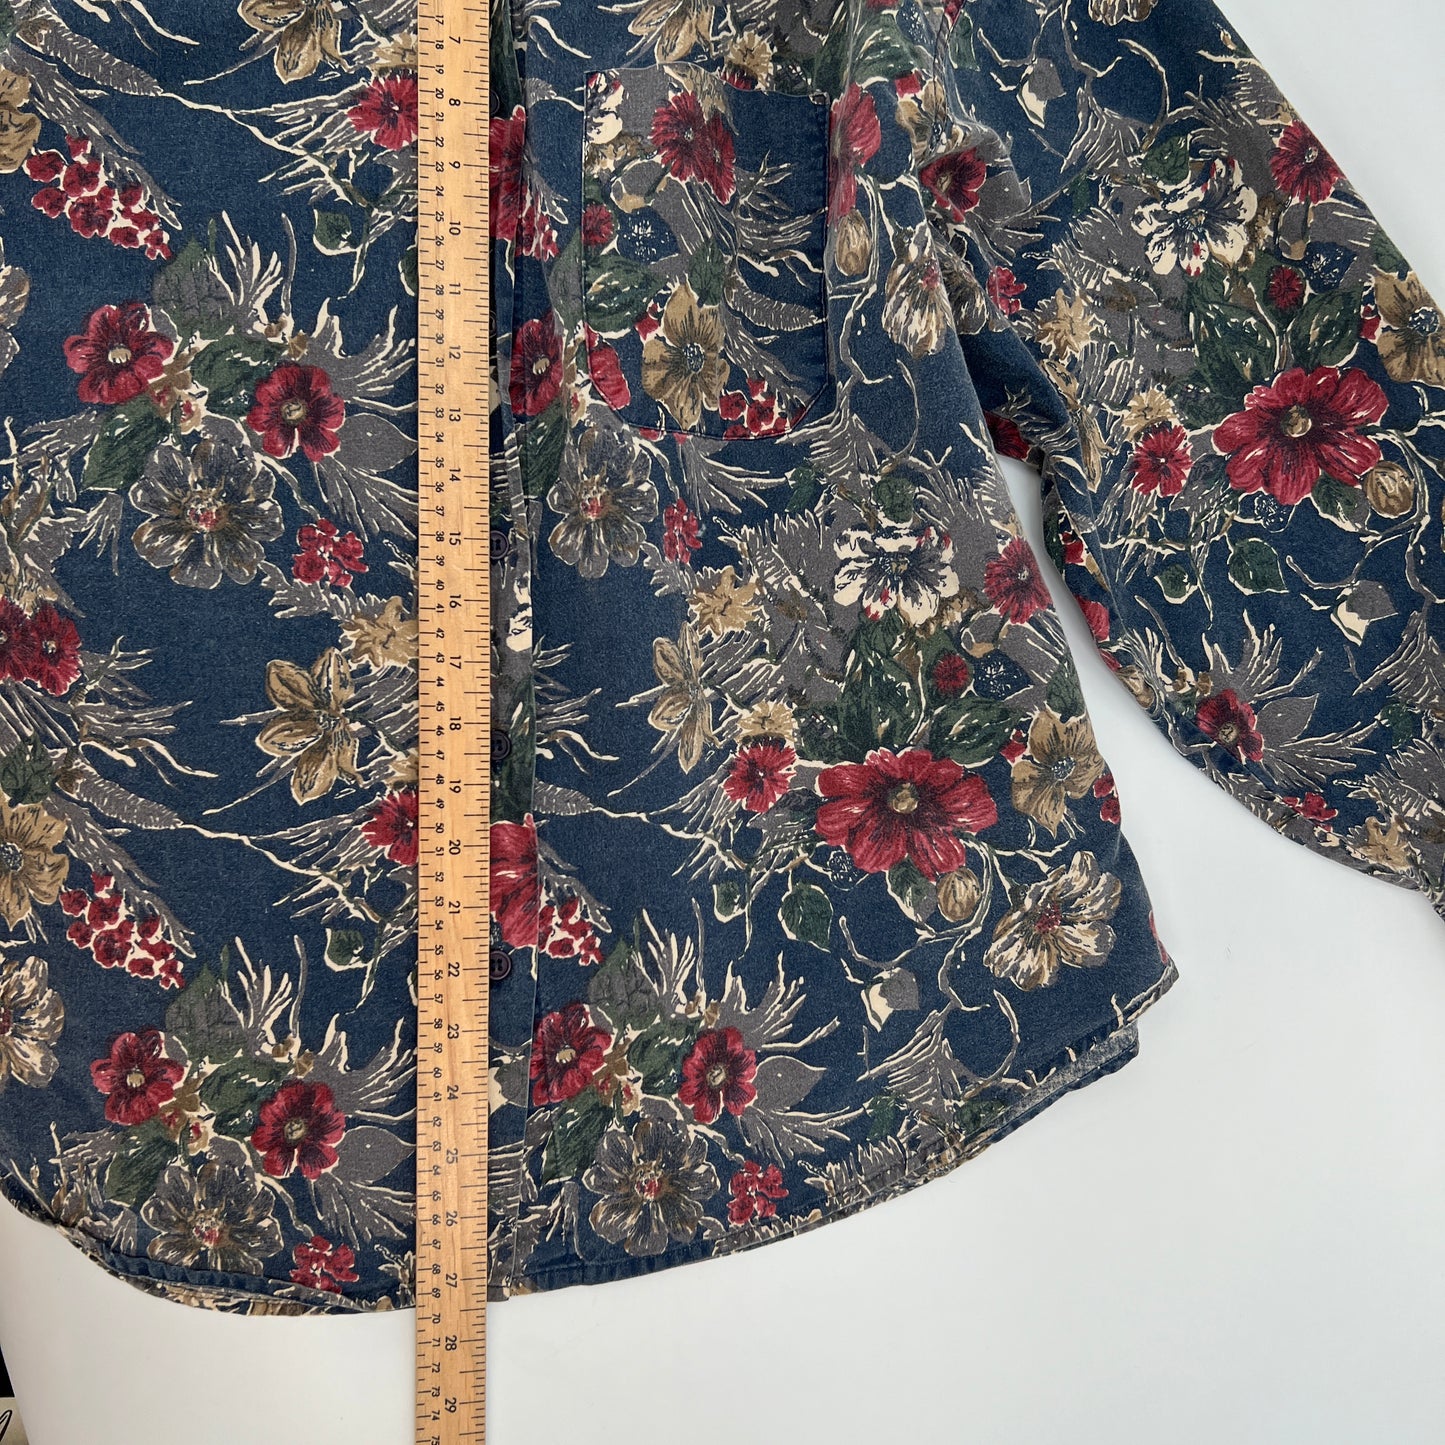 SOLD. Vintage Cotton Floral Casual Shirt